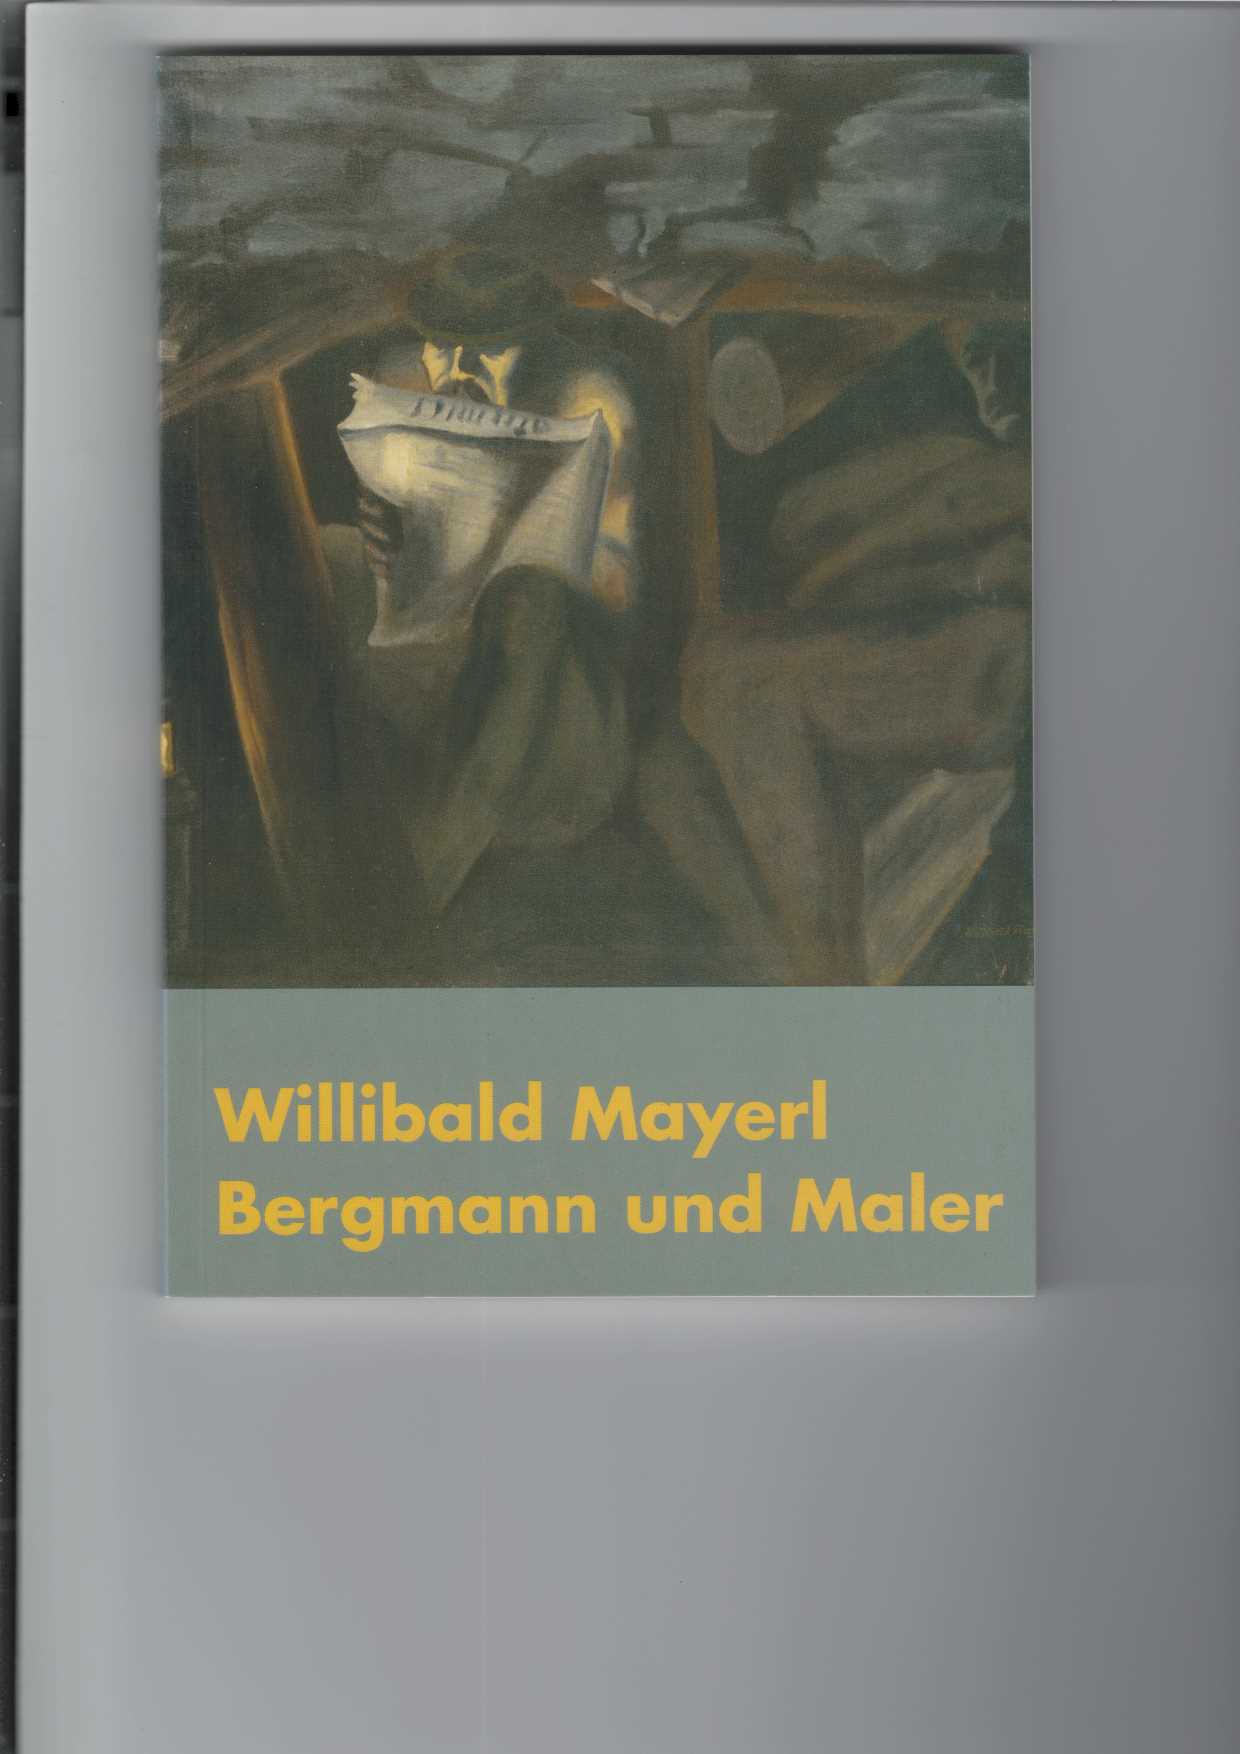   Willibald Mayerl - Bergmann und Maler 1896 - 1977. 